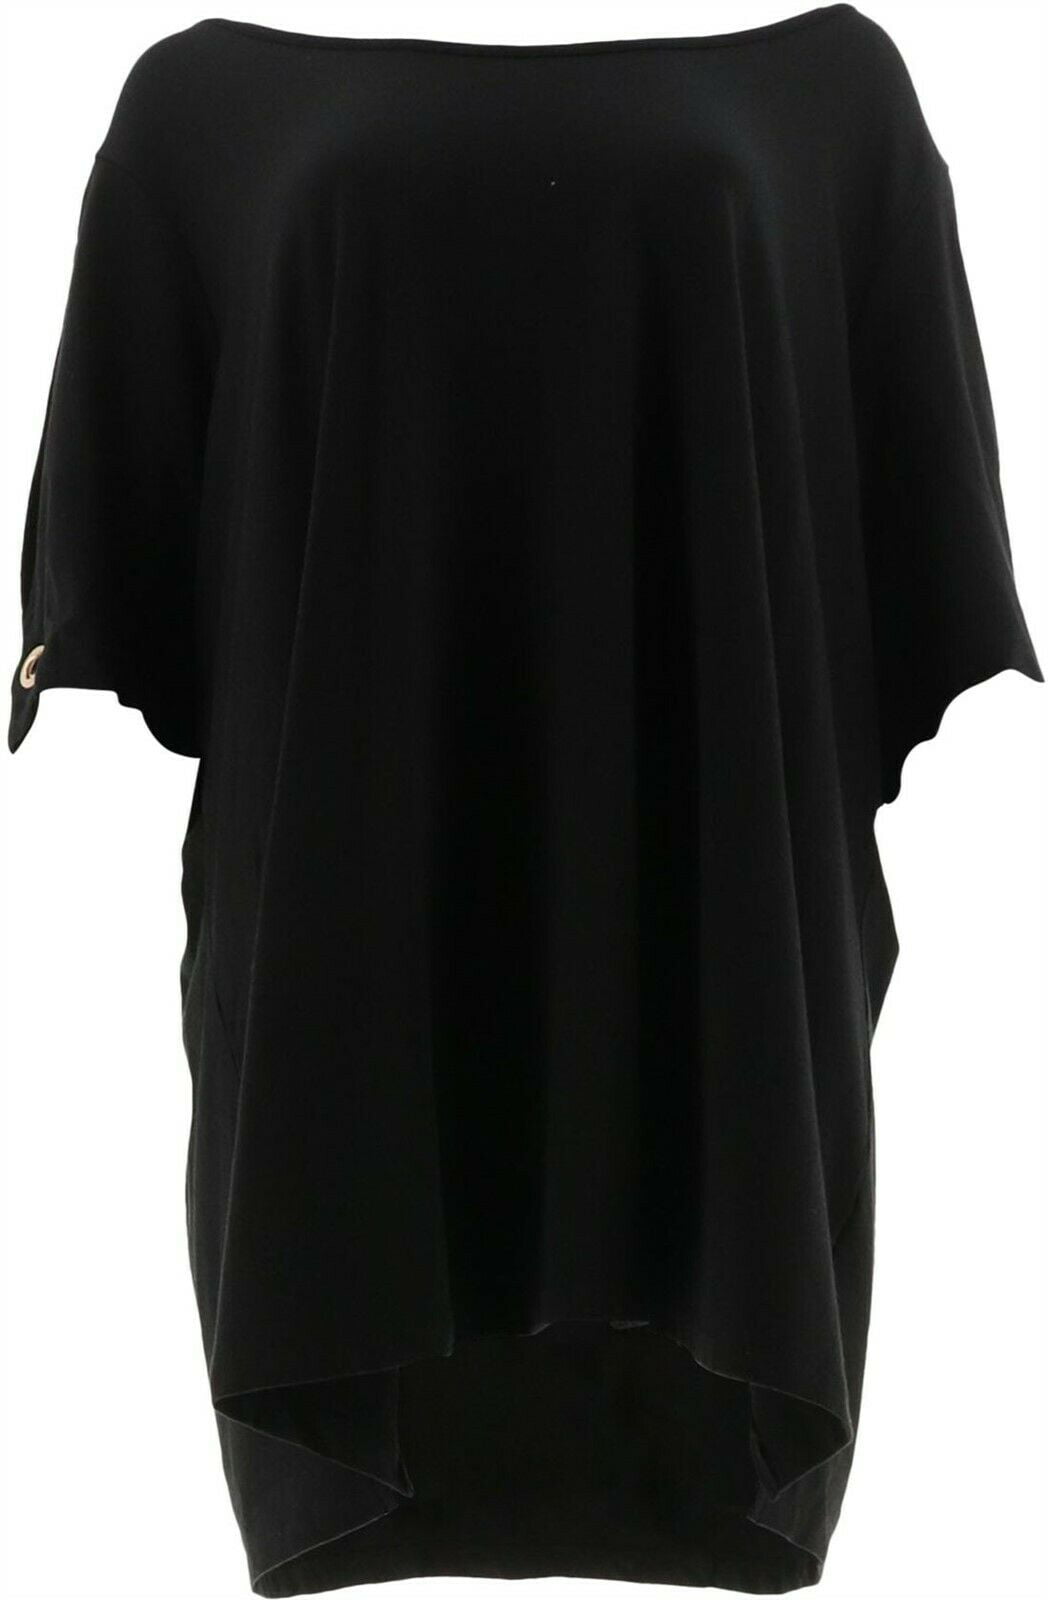 Belle Kim Gravel Black Knit Twist Hem Top Long-Sleeve T-Shirt New